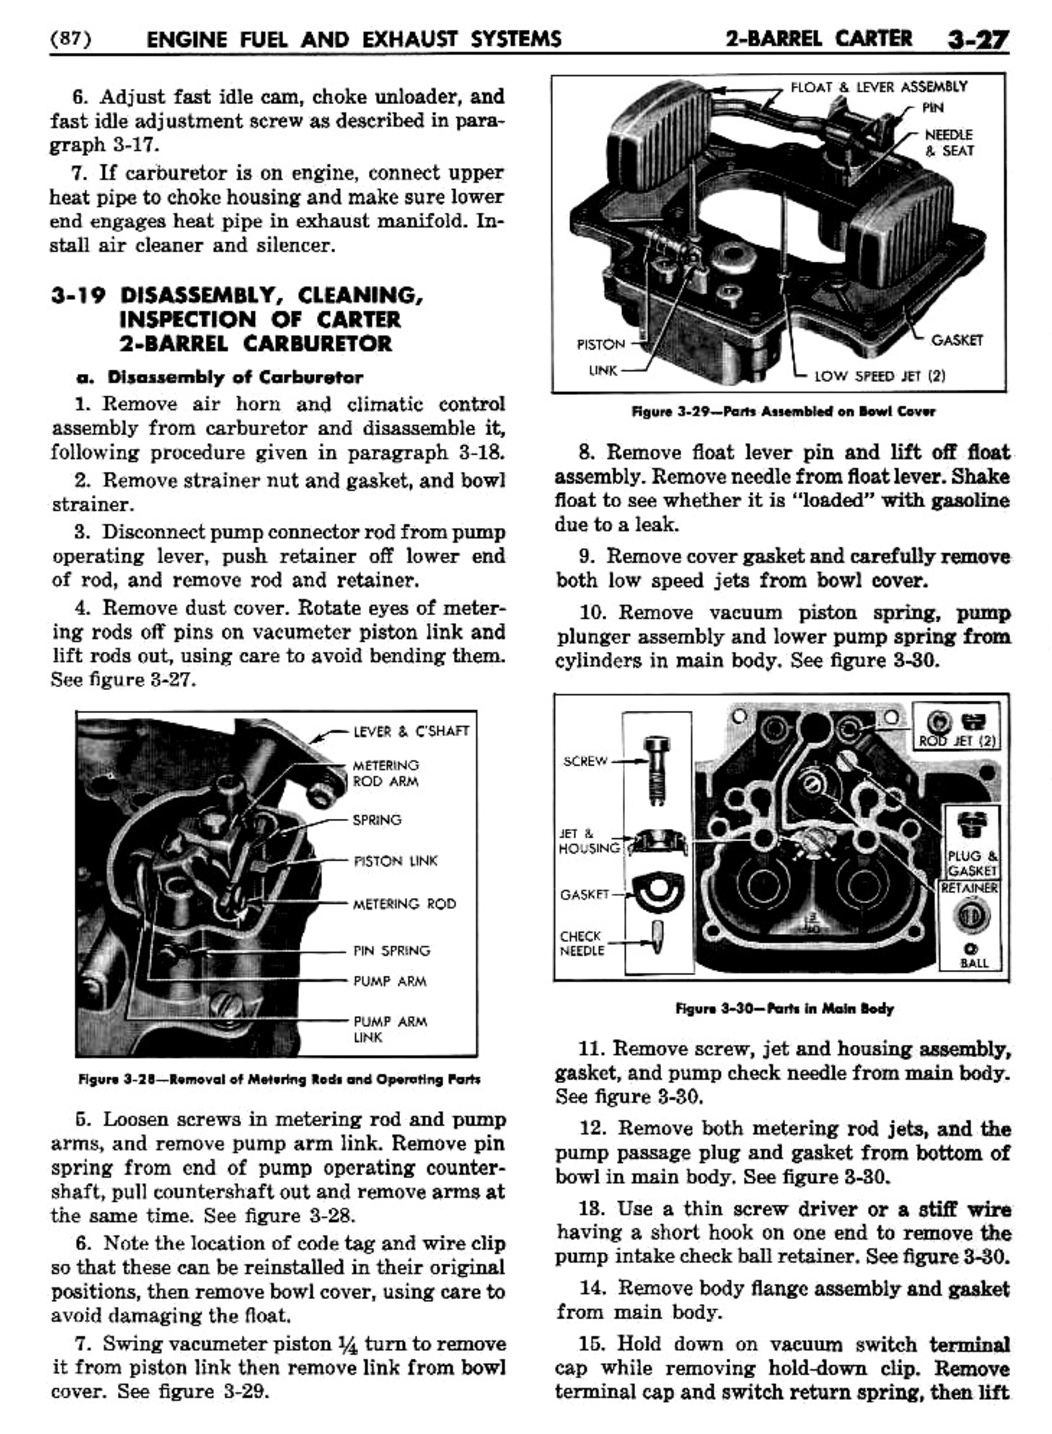 n_04 1955 Buick Shop Manual - Engine Fuel & Exhaust-027-027.jpg